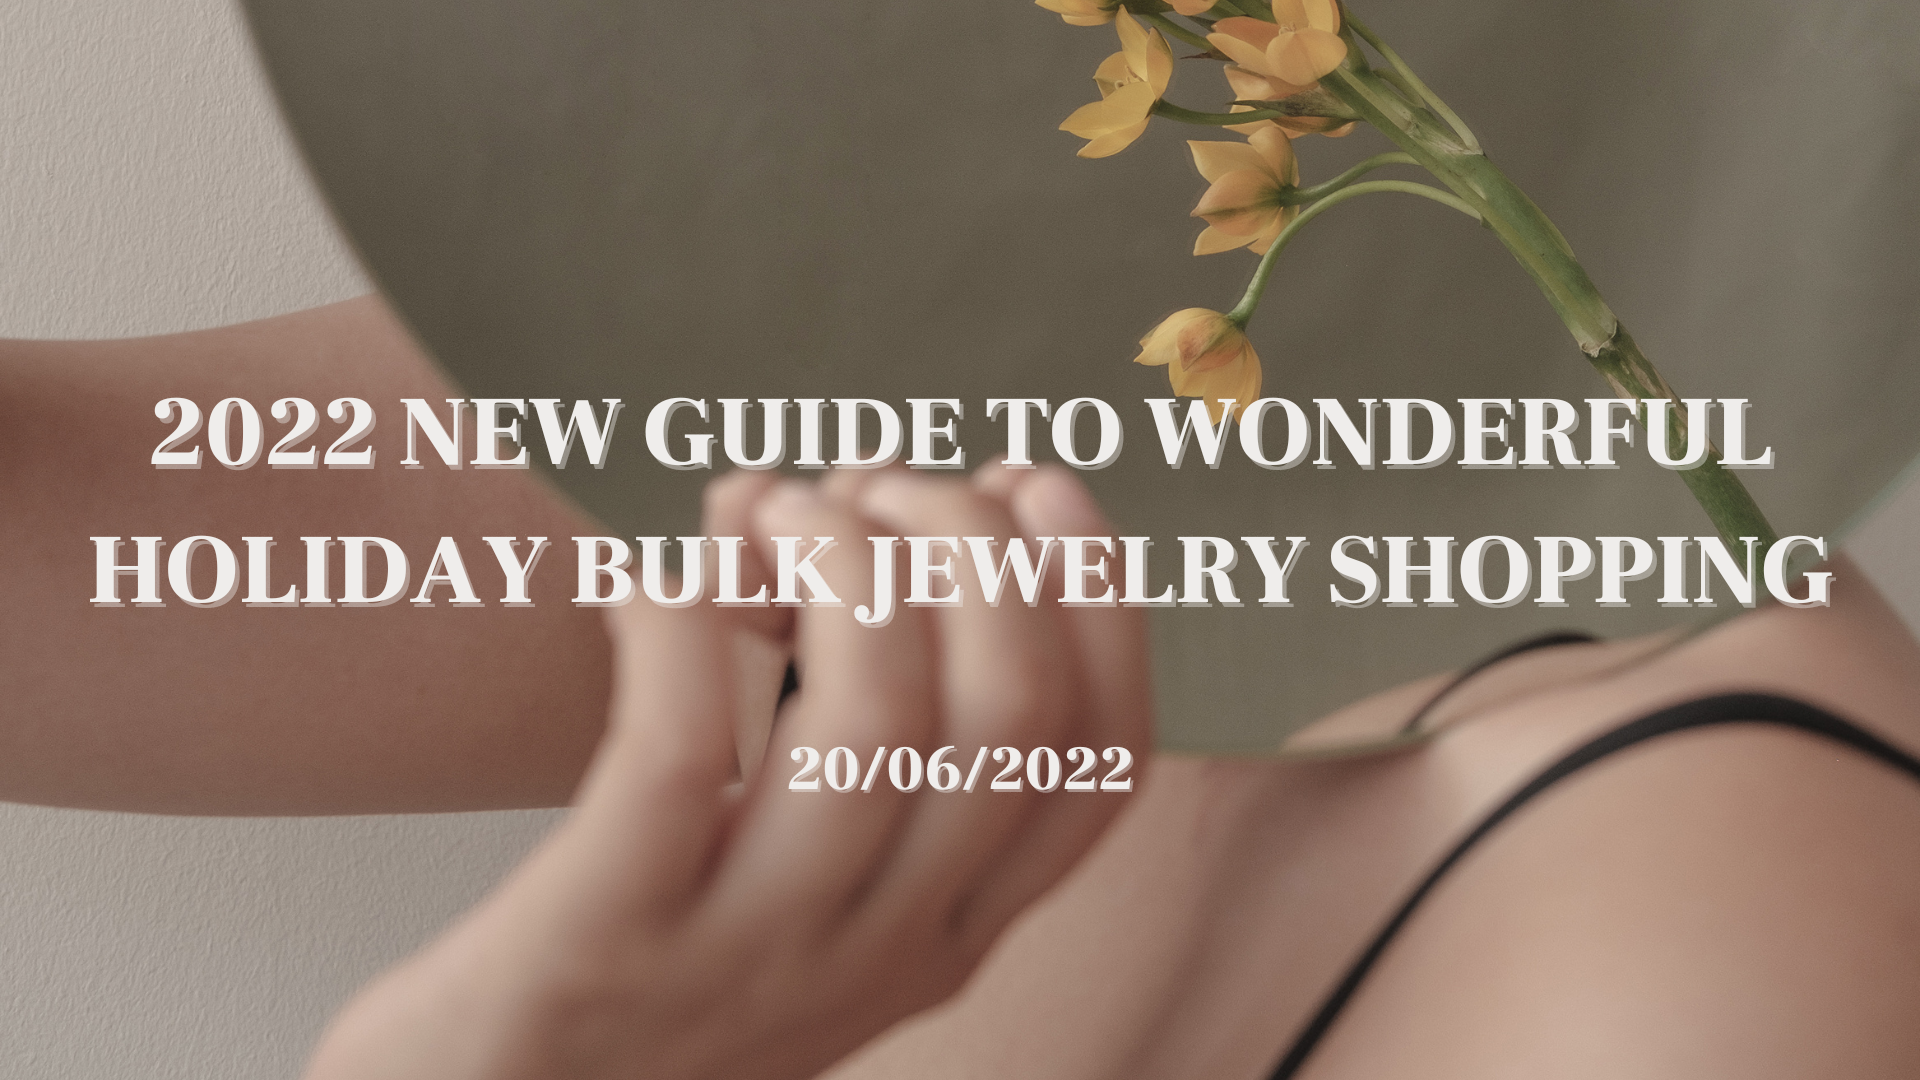 Holiday bulk jewelry